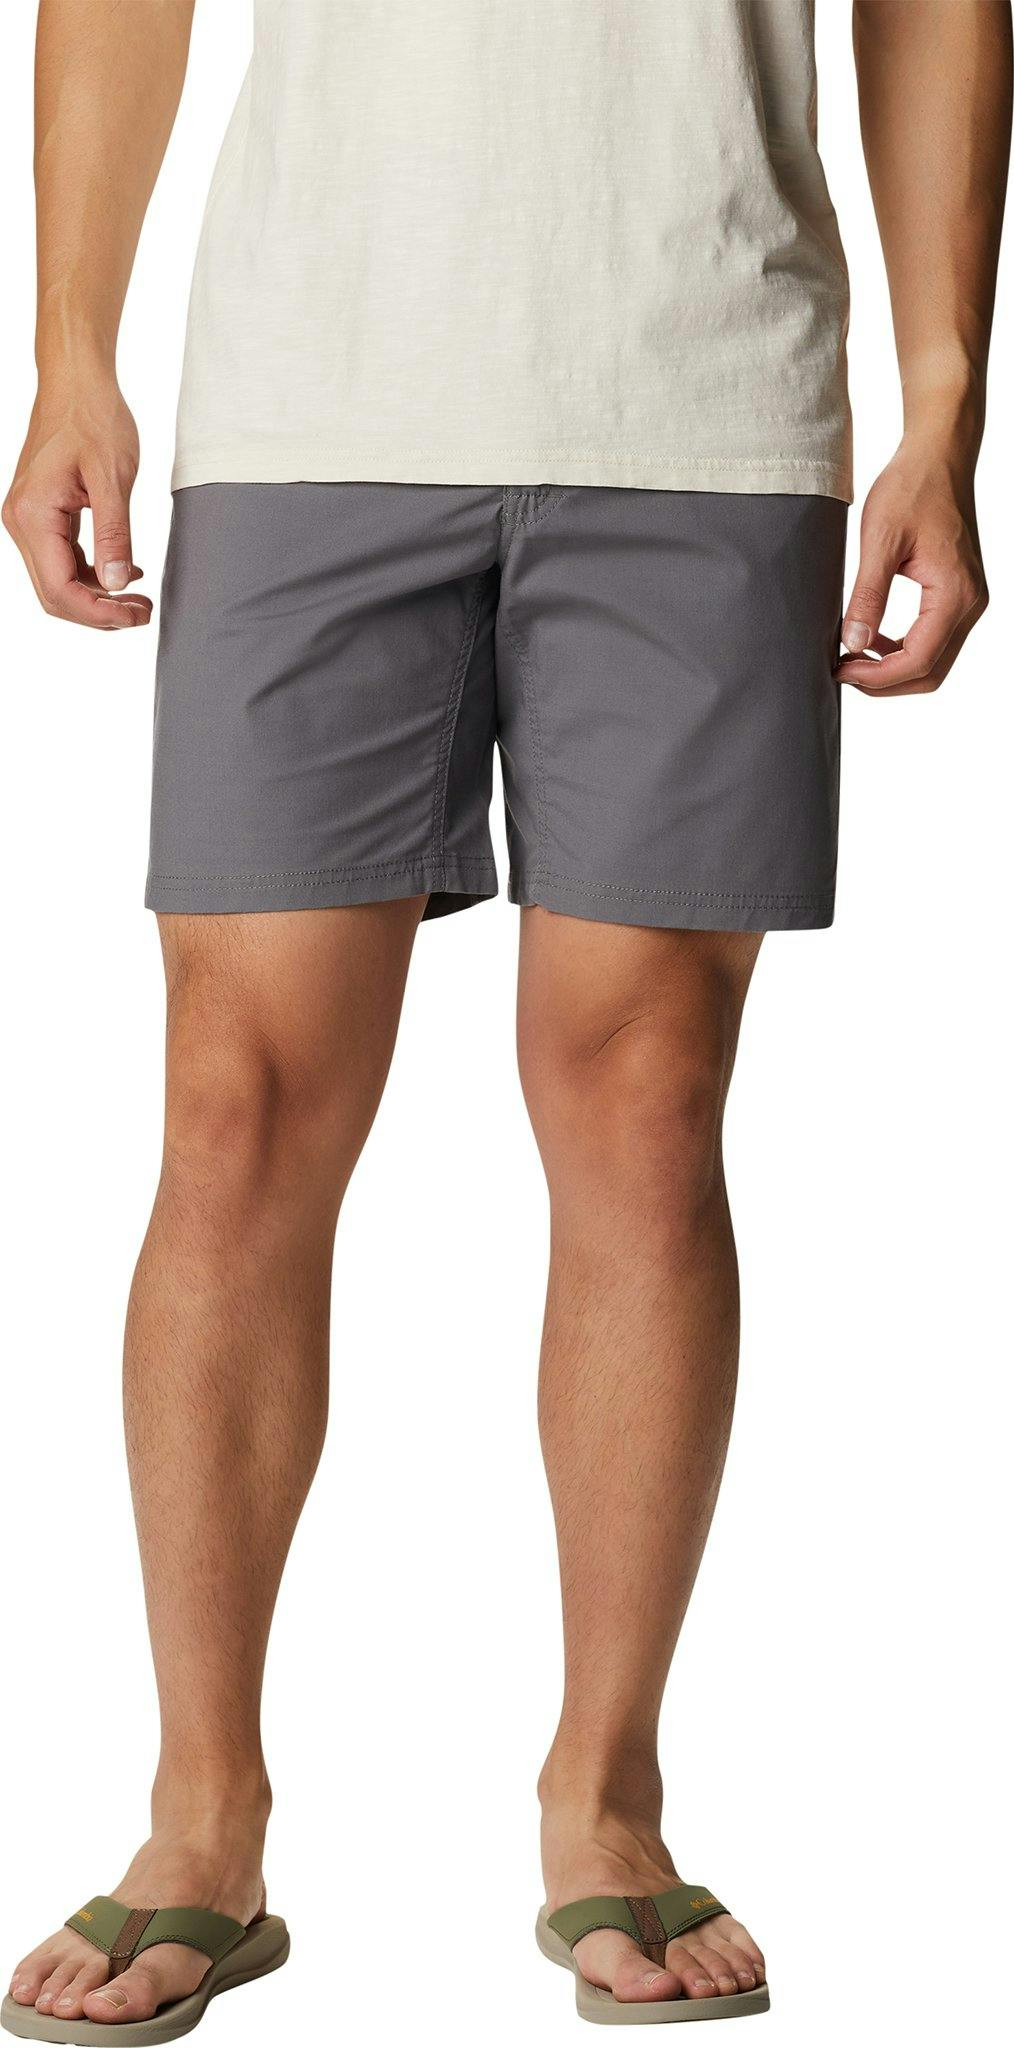 Product image for Cobble Creek 5 Pocket Shorts - Men's